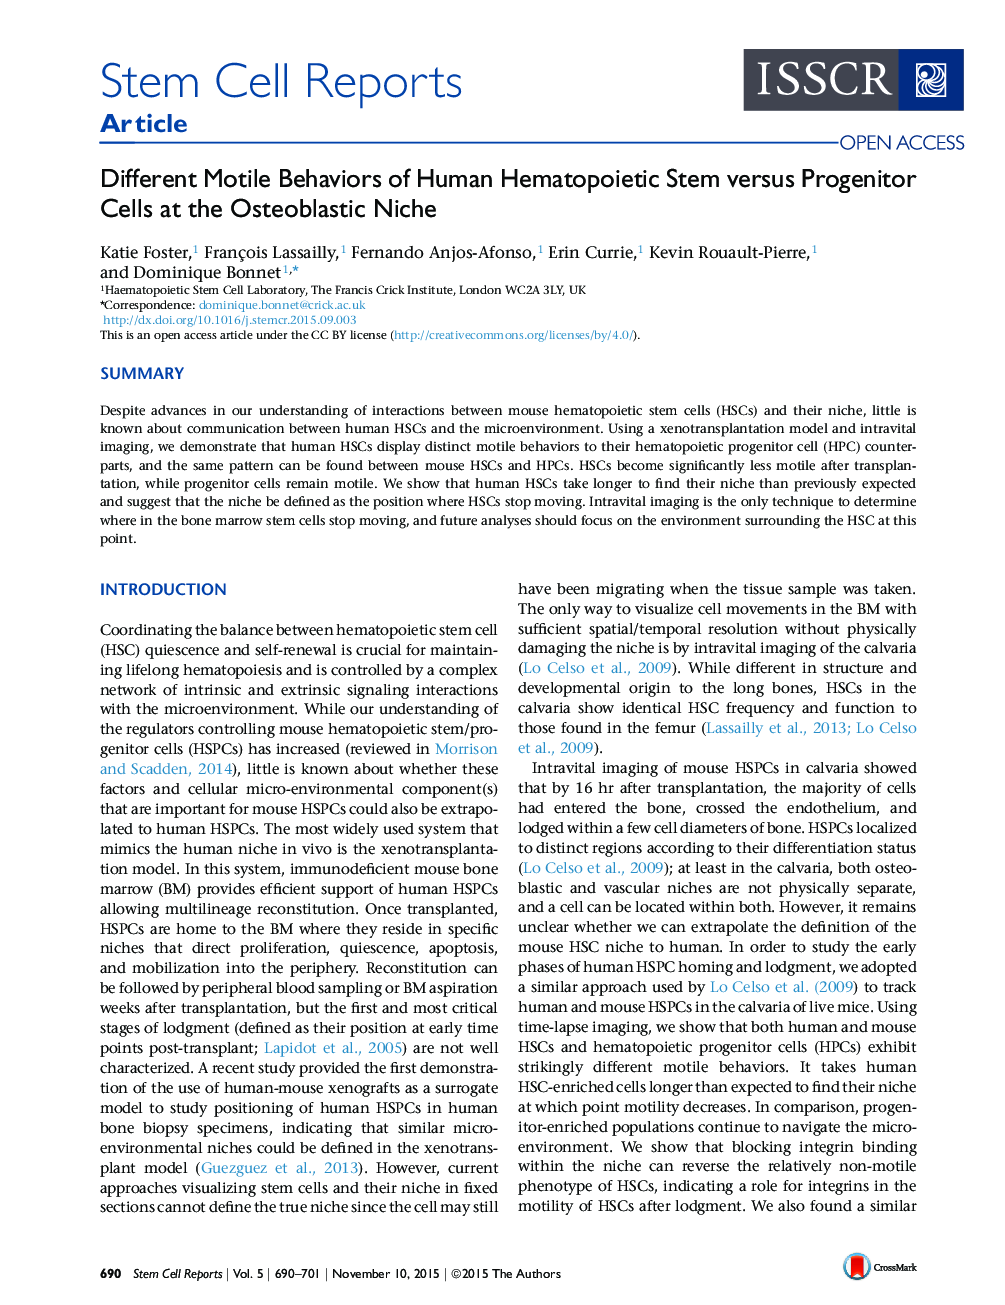 Different Motile Behaviors of Human Hematopoietic Stem versus Progenitor Cells at the Osteoblastic Niche 